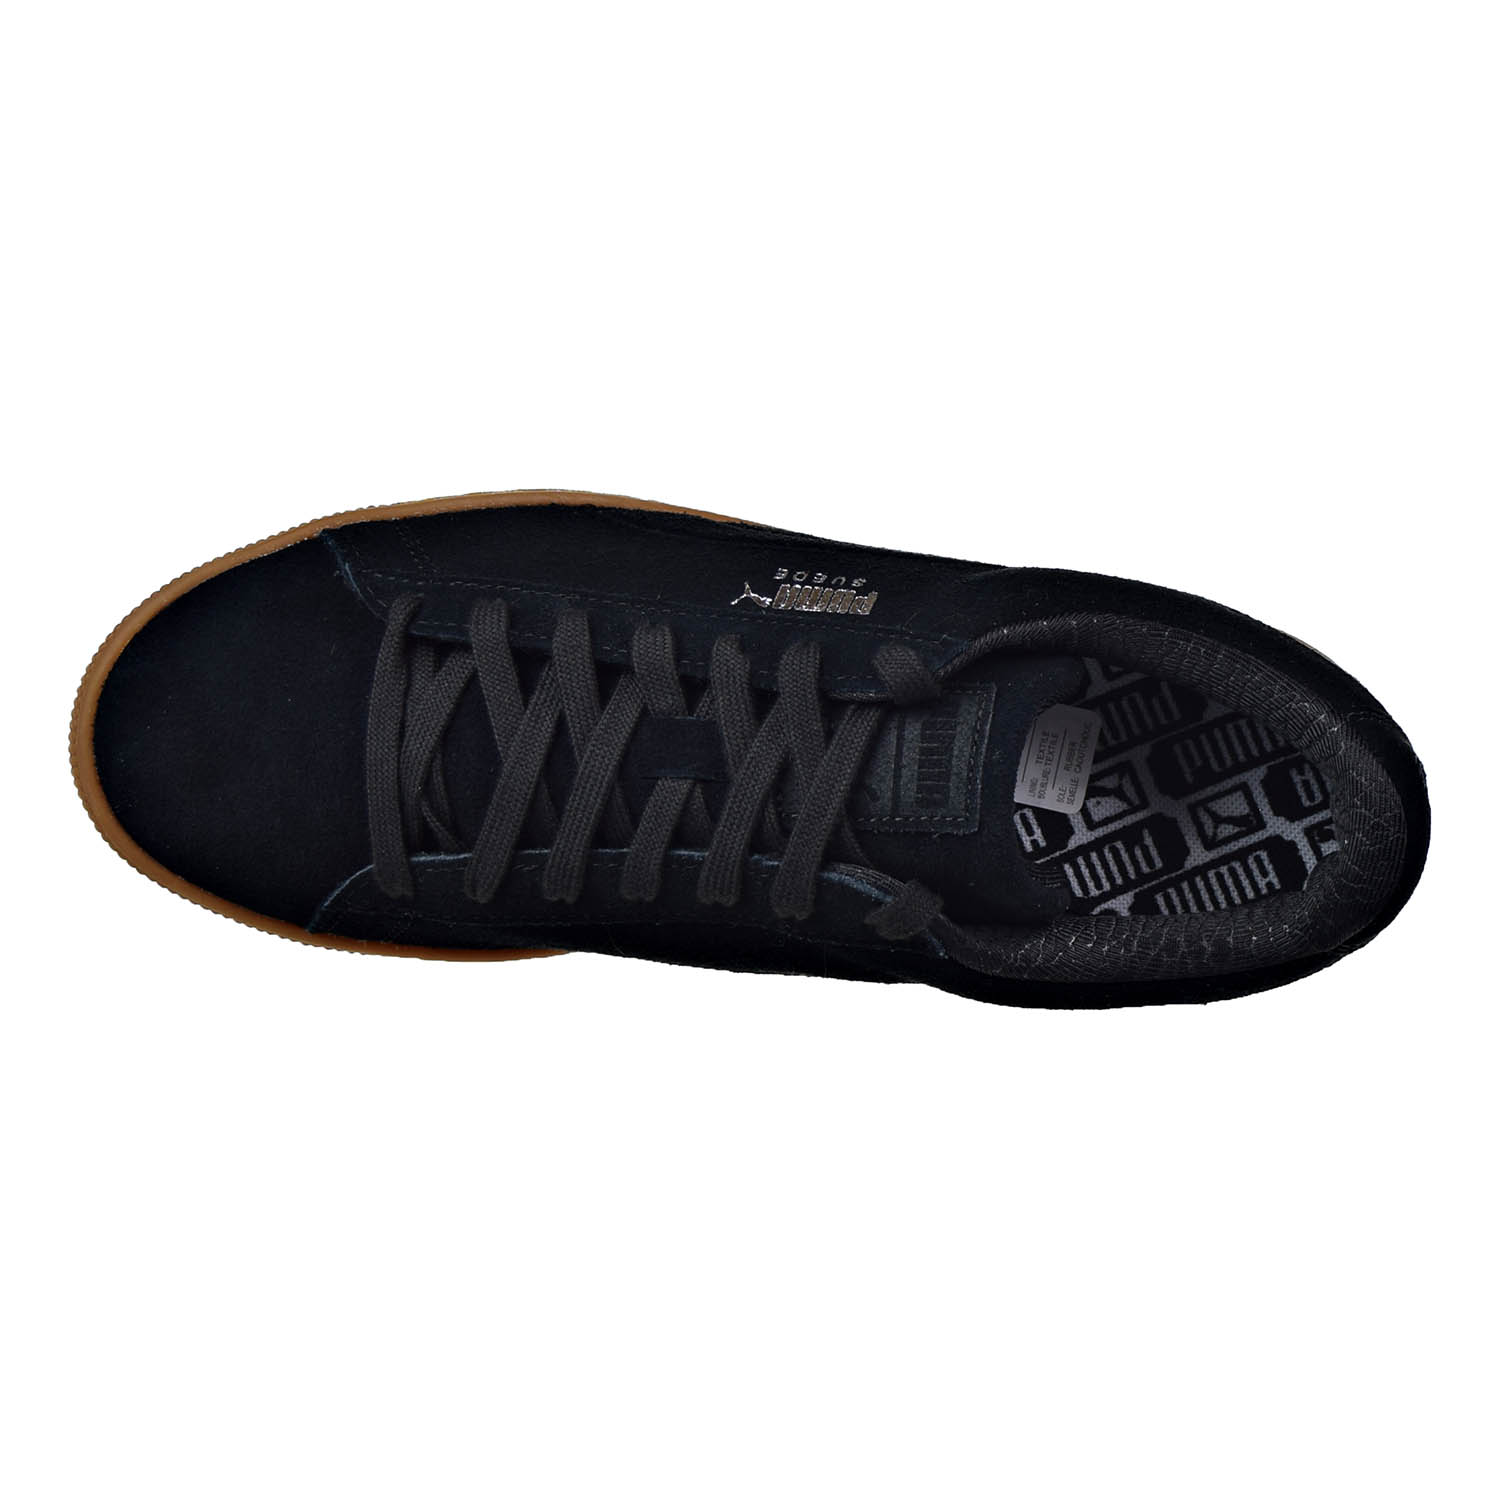 Puma Suede Classic Debossed Q4 Men's Shoes Puma Black/Glacier Grey 361098-02 - image 5 of 6